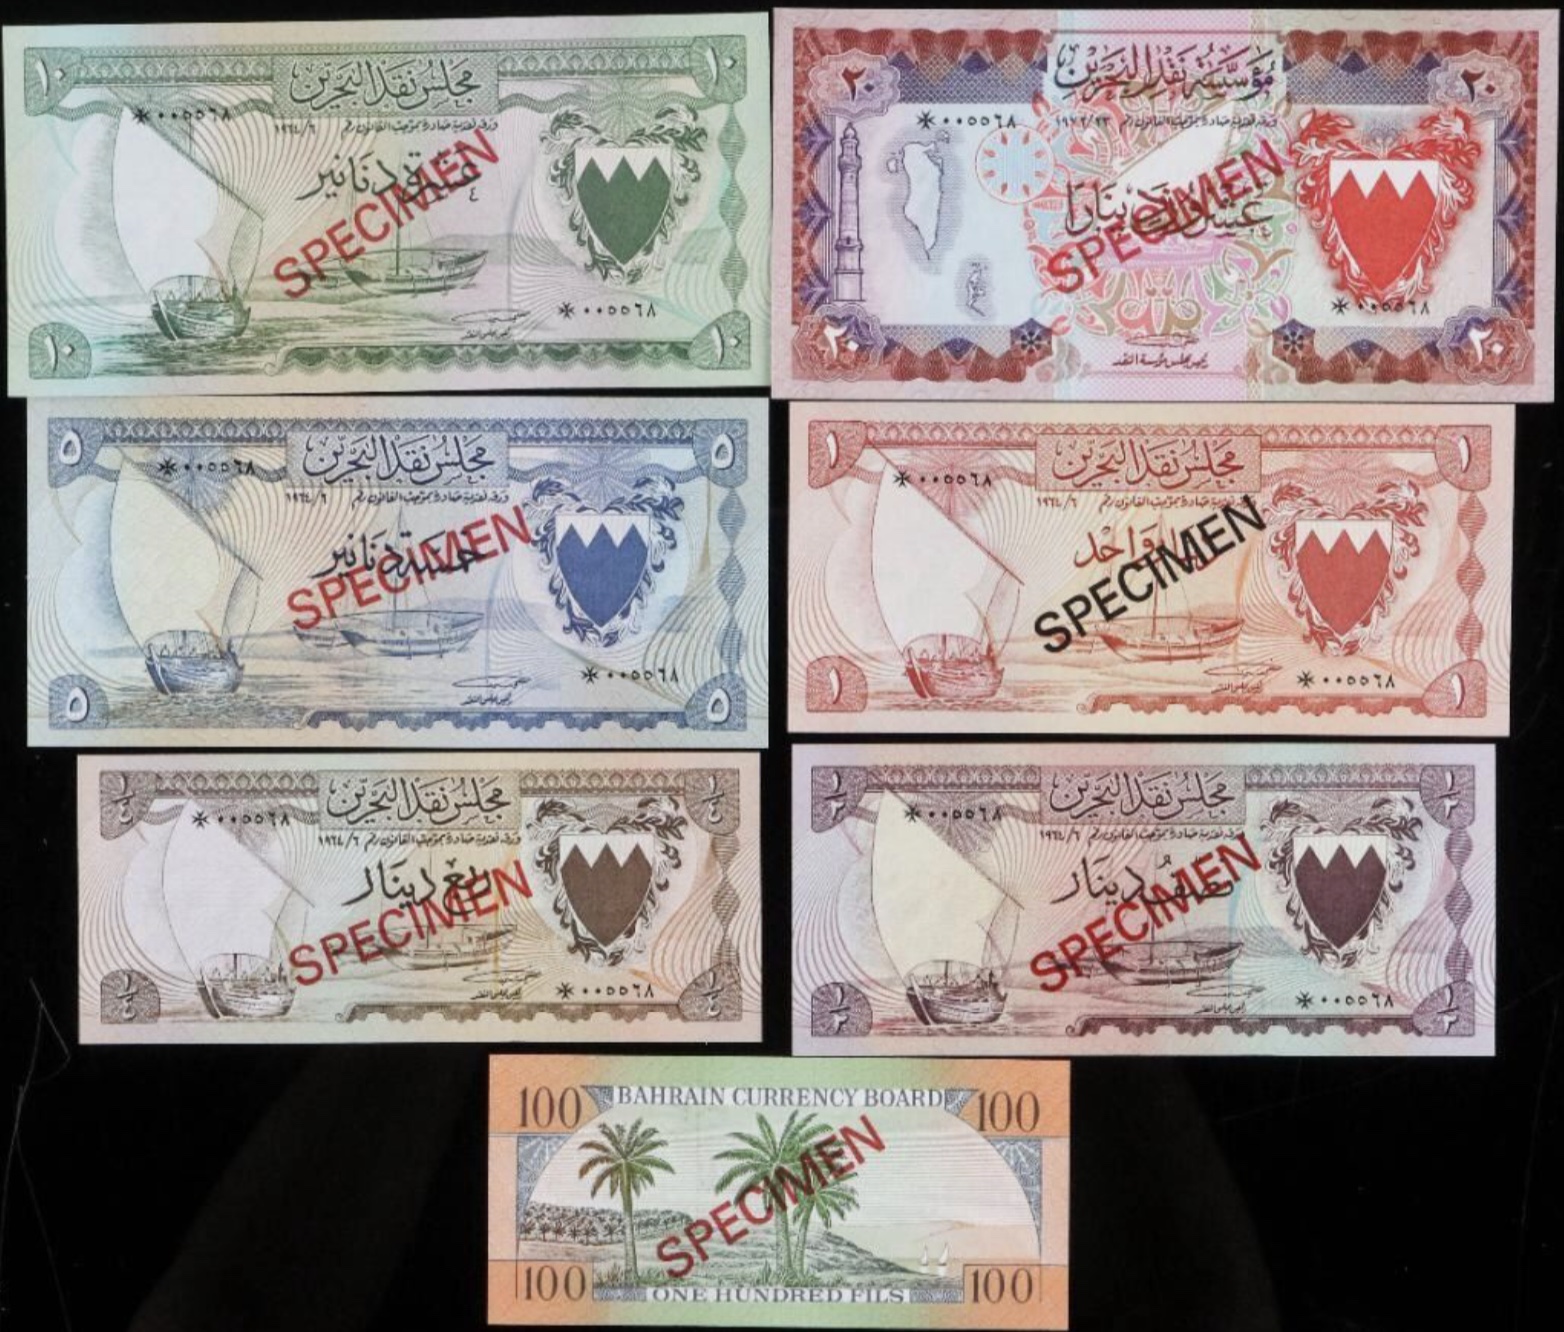 1978 Bahrain Monetary Agency Specimen Set of 7 Banknotes Same Serial Number (UNC)